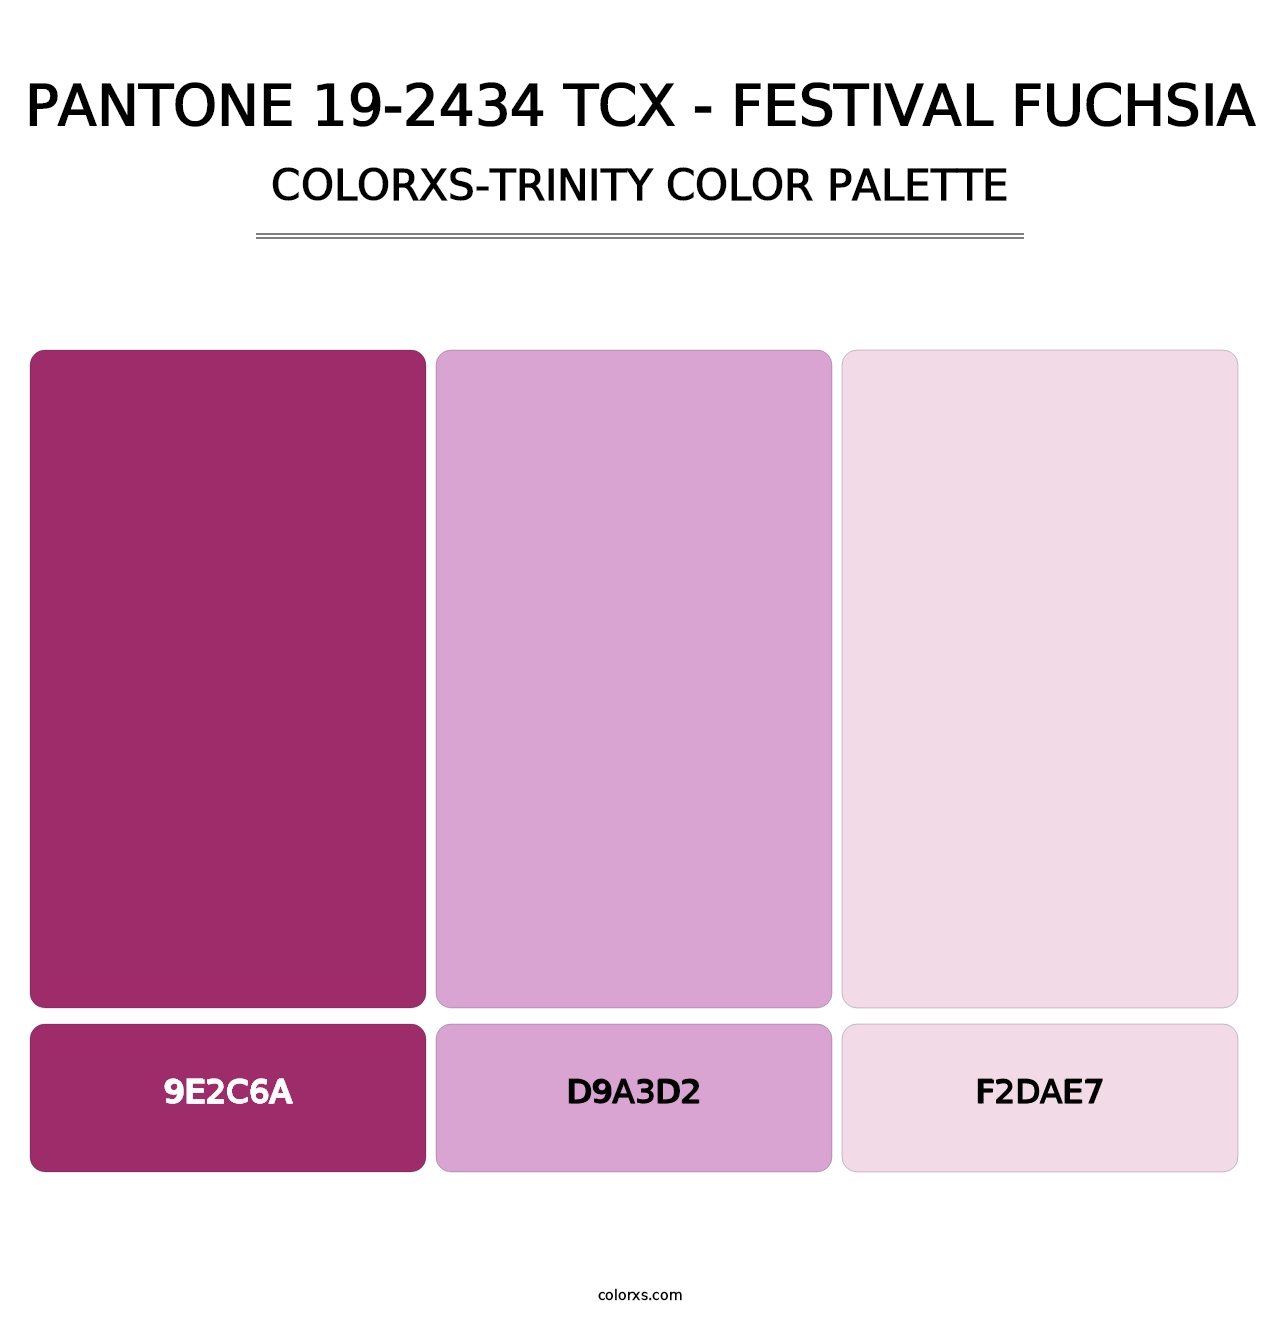 PANTONE 19-2434 TCX - Festival Fuchsia - Colorxs Trinity Palette